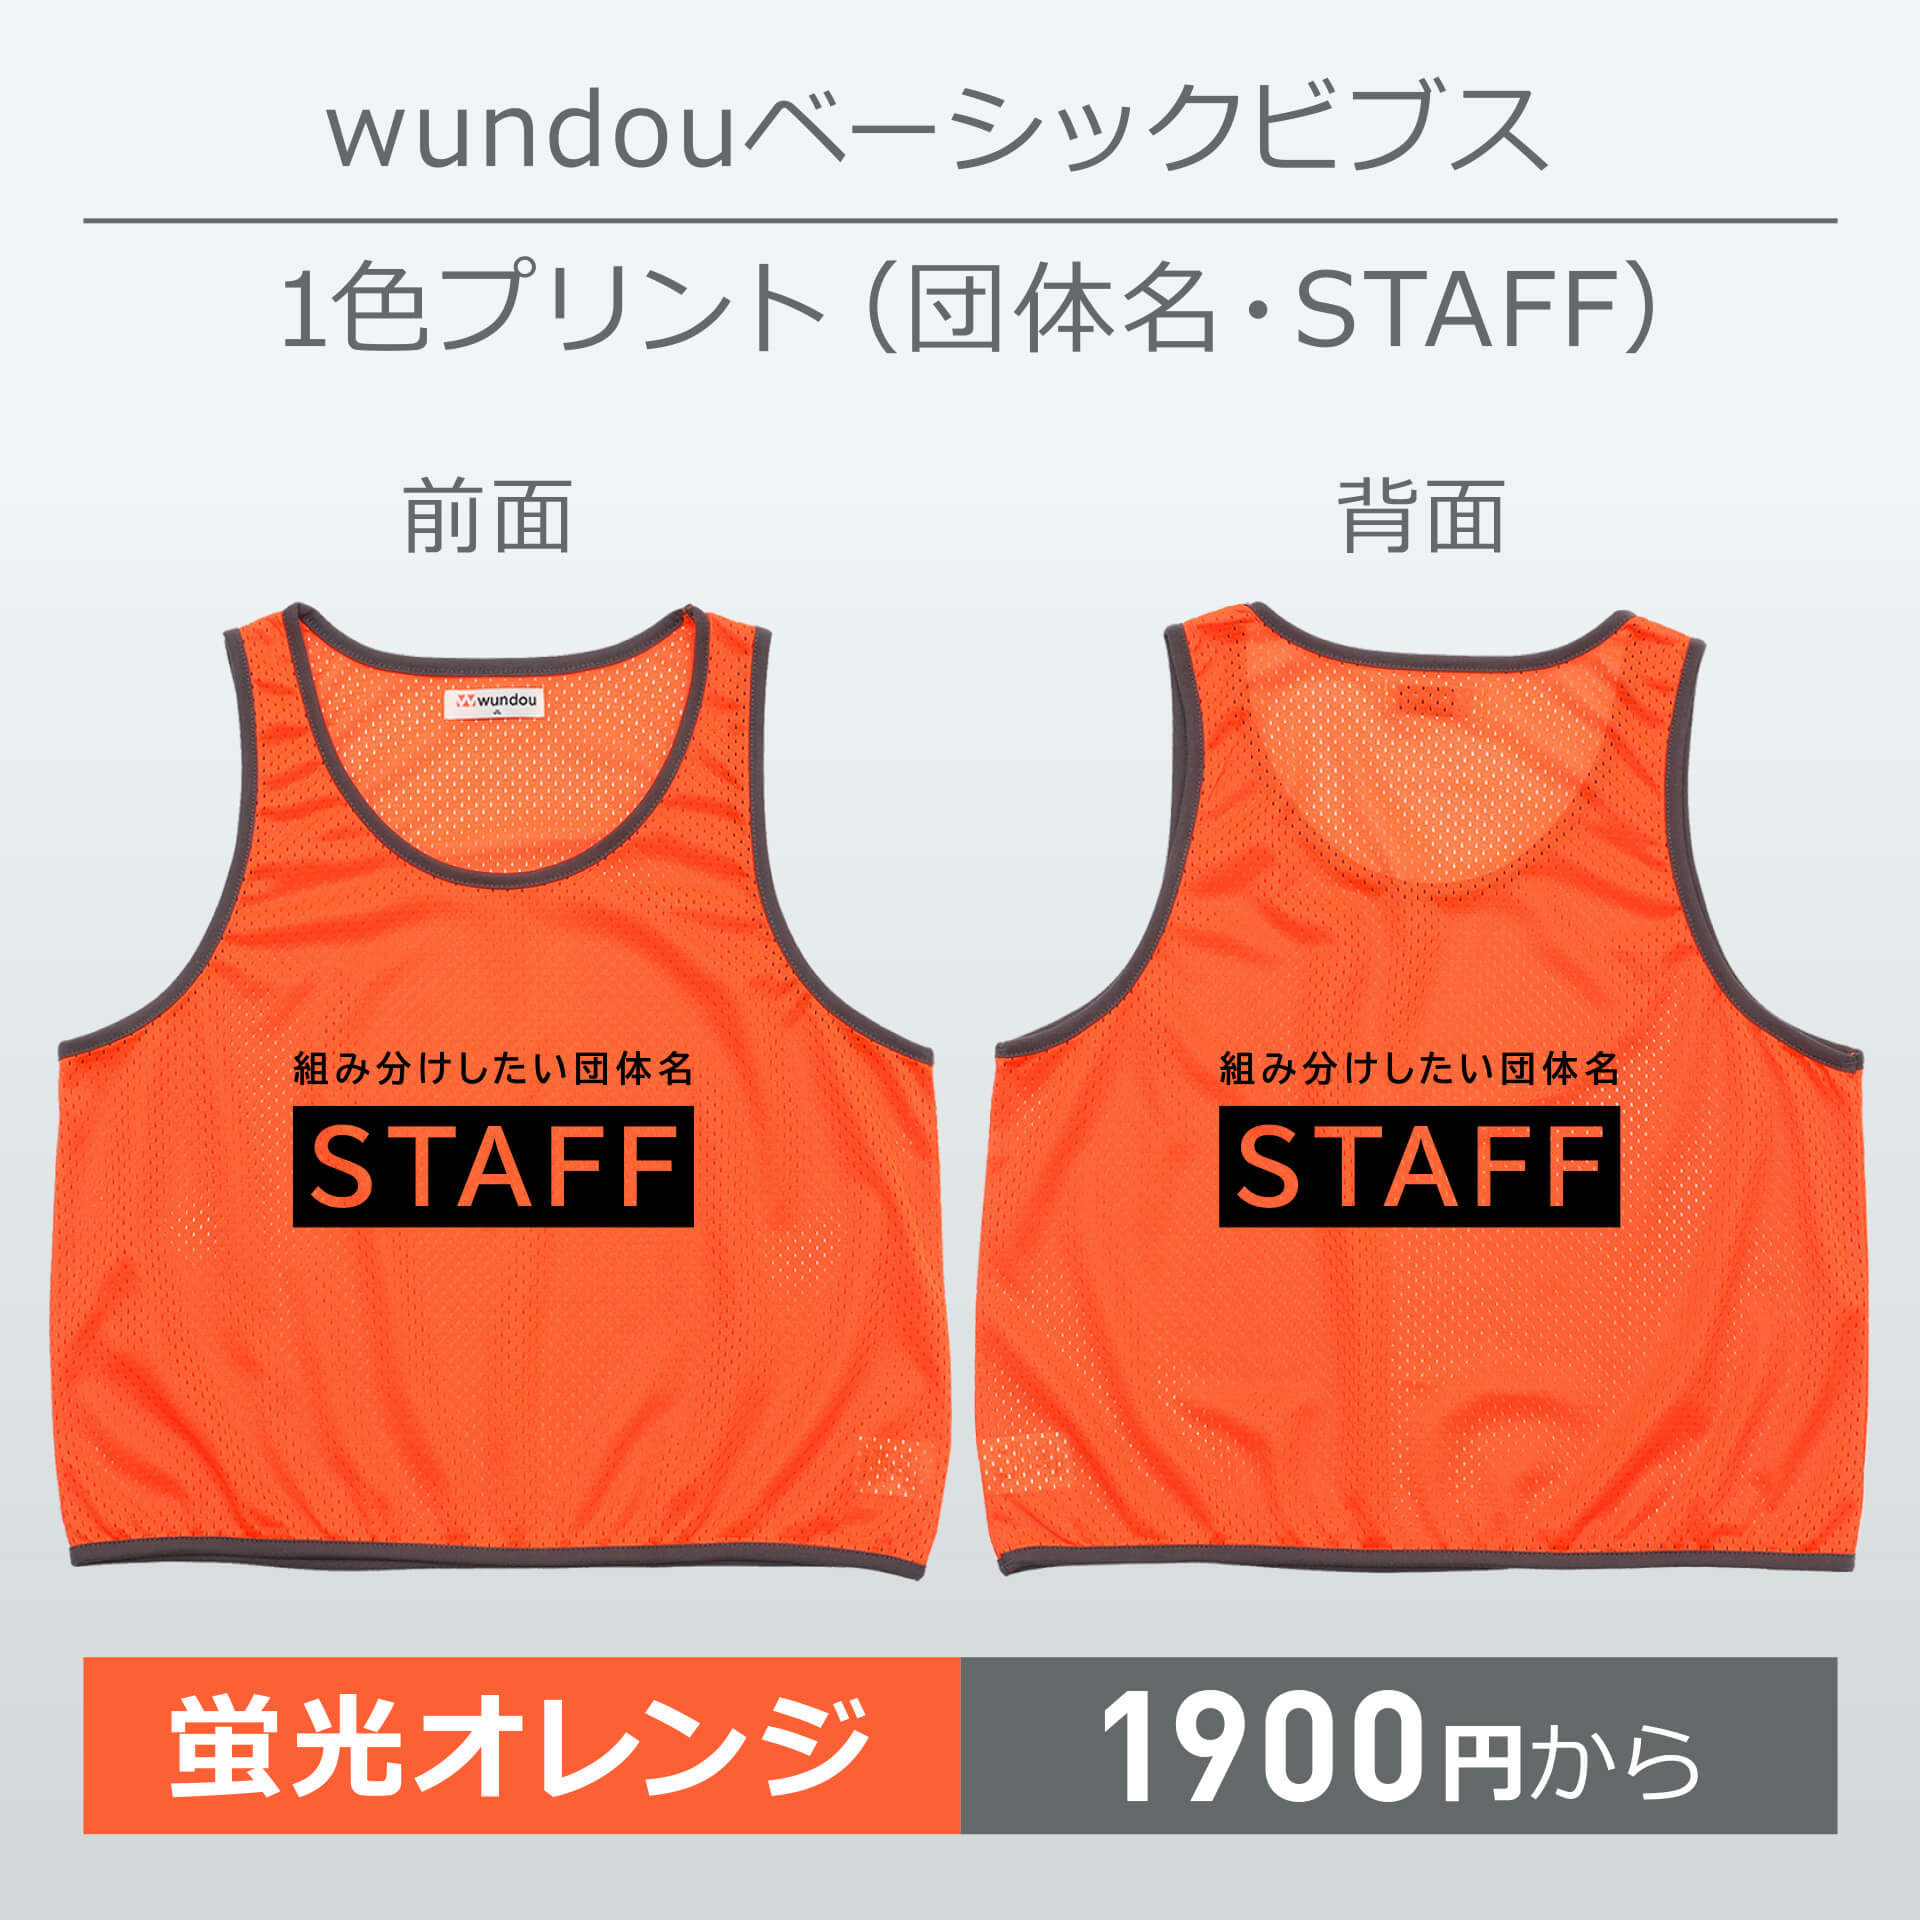 wundou・ベーシックビブス・1色プリント(団体名・STAFF)・蛍光オレンジ